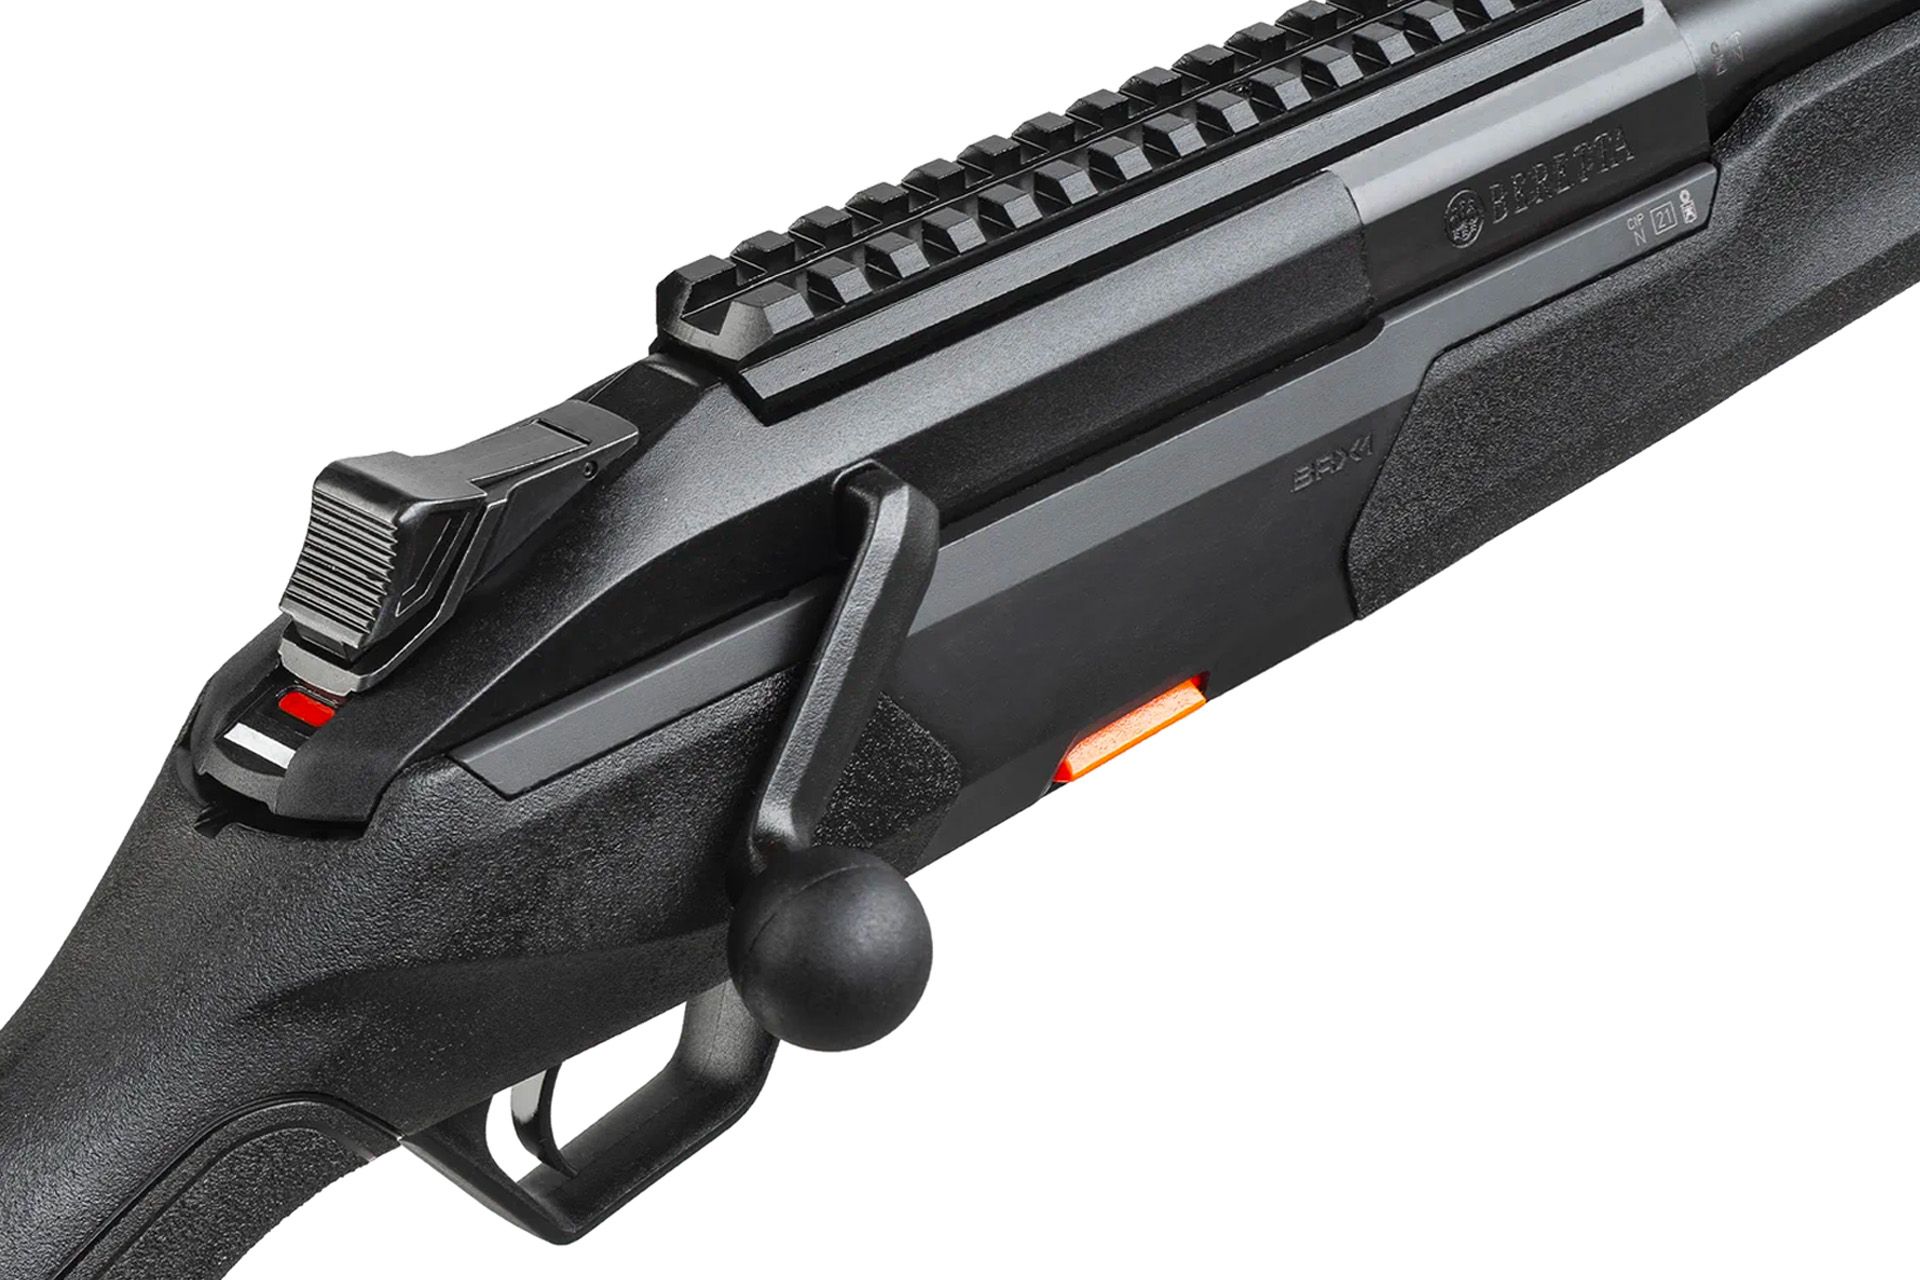 Beretta BRX1: the new straight-pull rifle